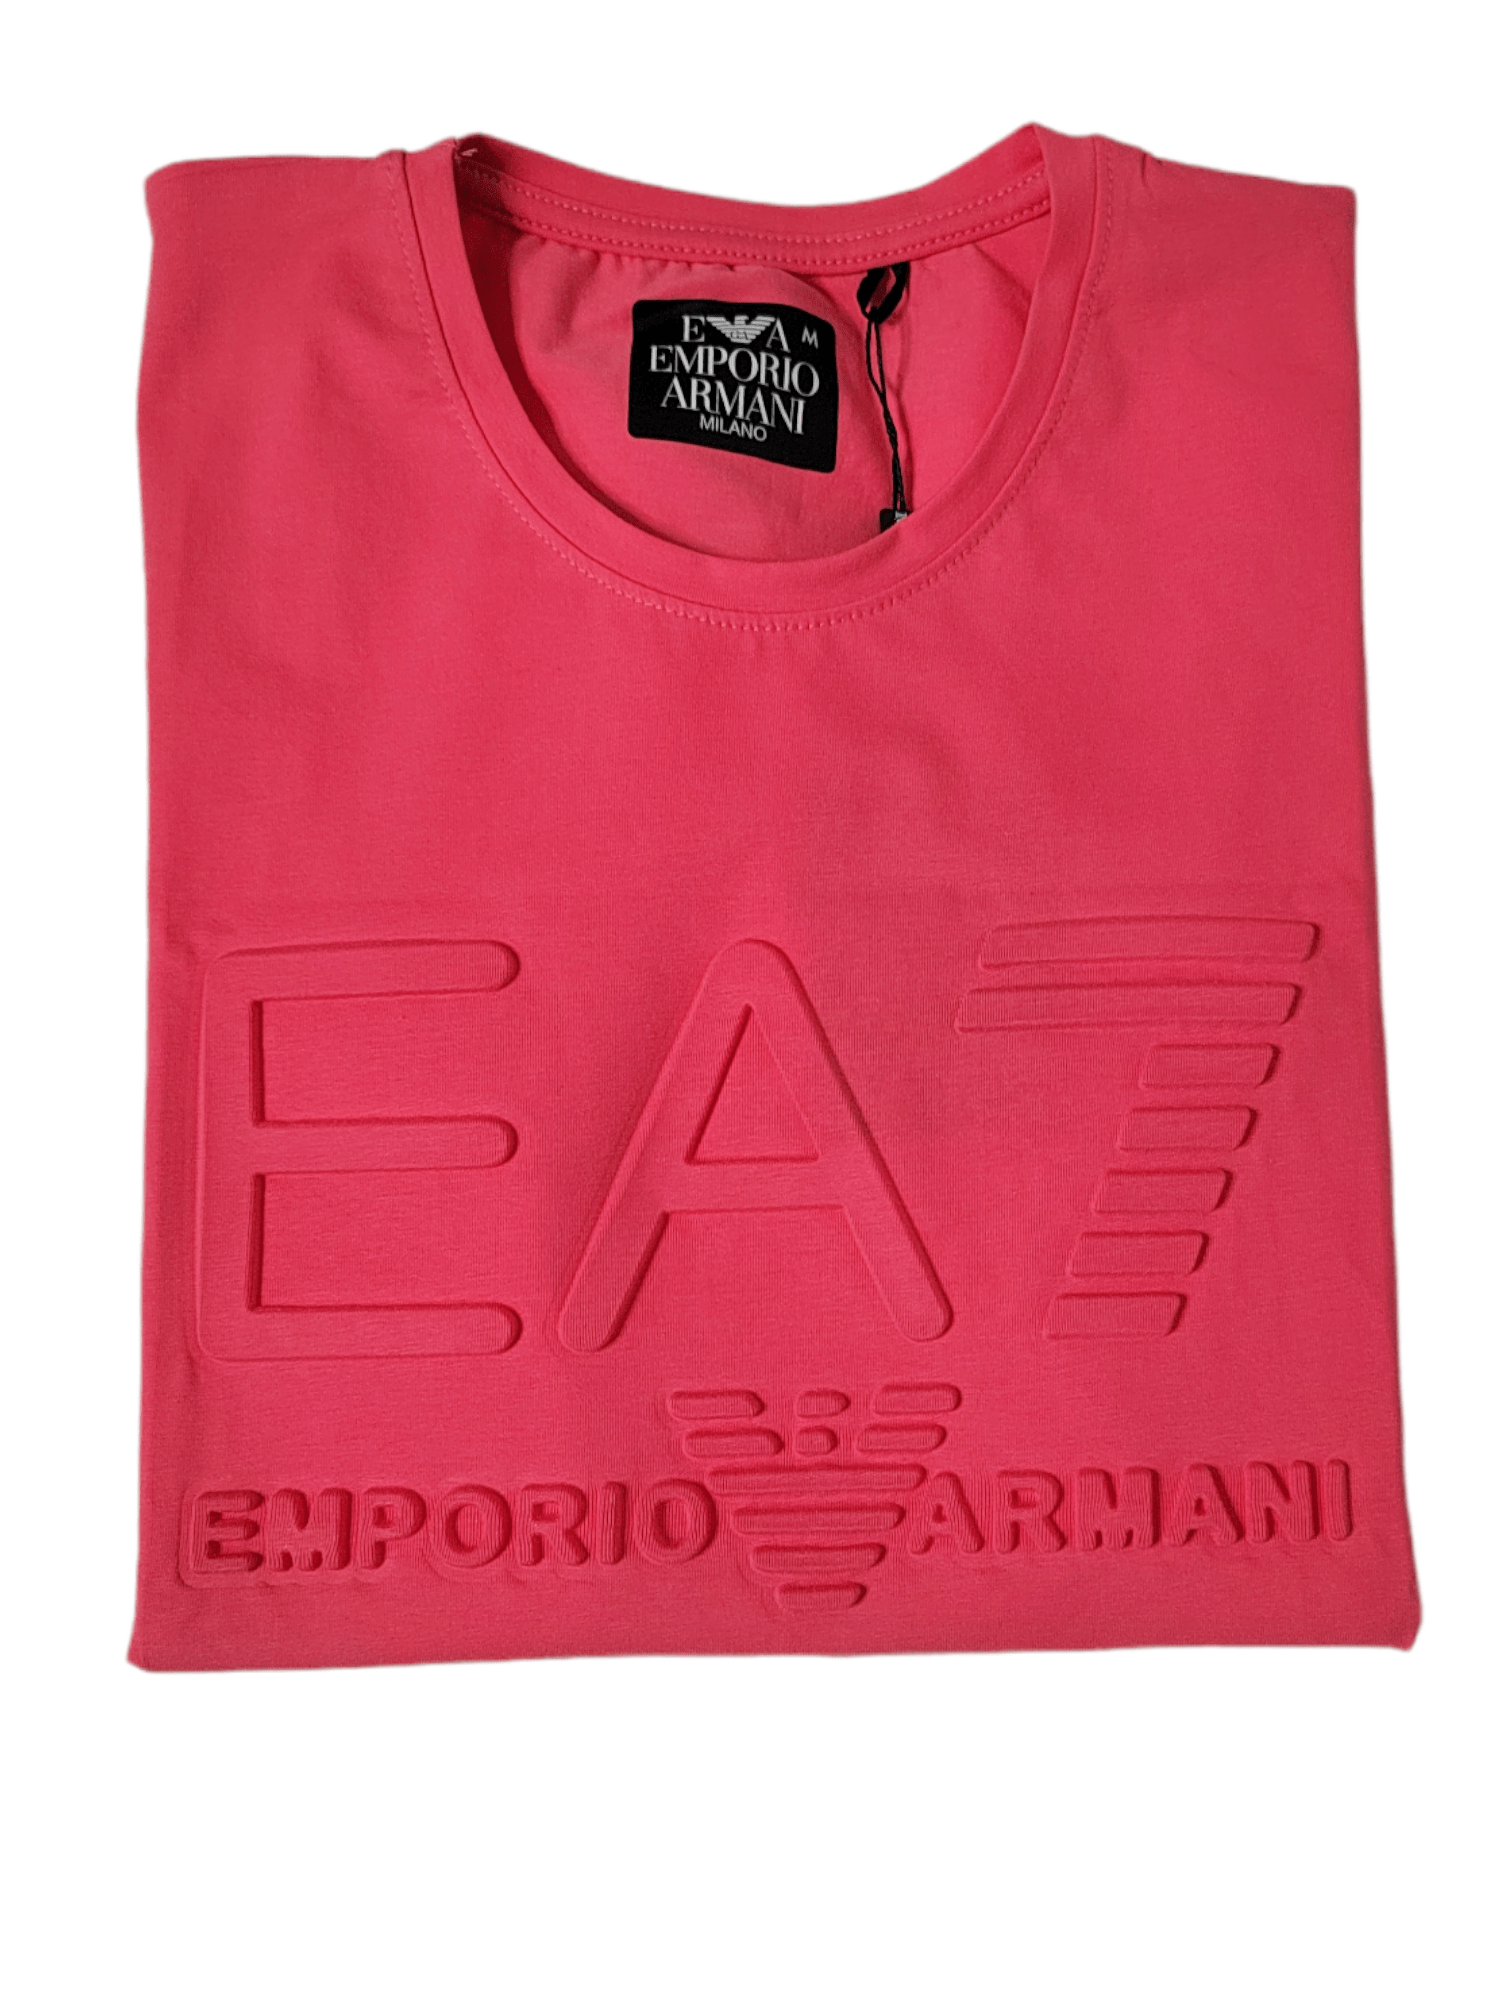 ElOutlet - Men Summer Men T-Shirt Men Round Tshirt (EA7) (Slim-Fit) - Watermelon Red